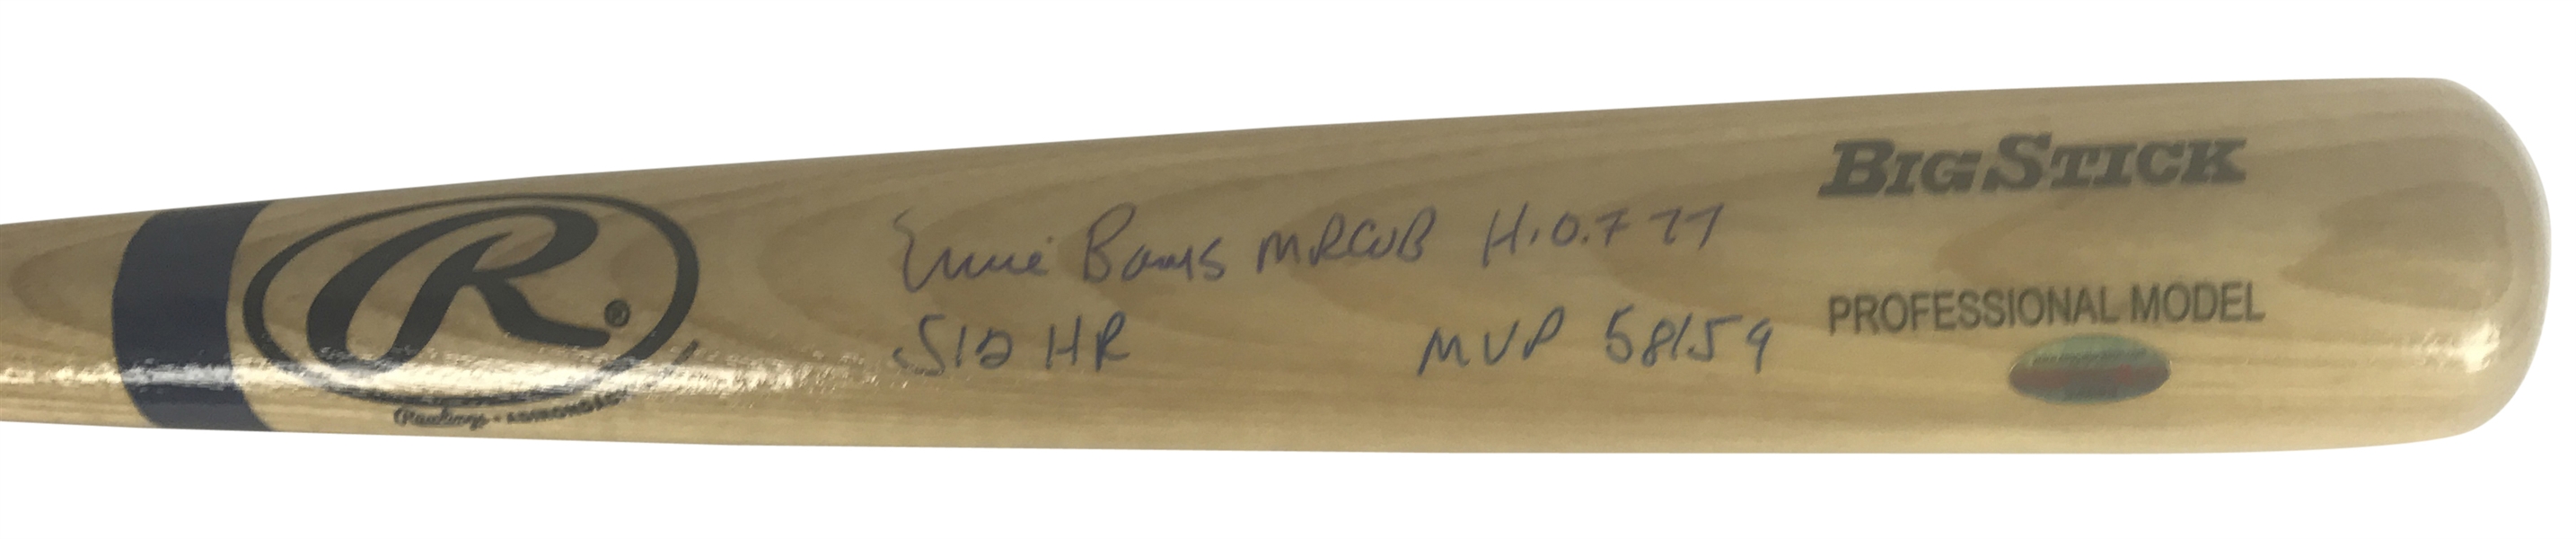 Ernie Banks Signed Big Stick Baseball Bat w/ 4 Inscriptions! (Beckett/BAS Guaranteed)